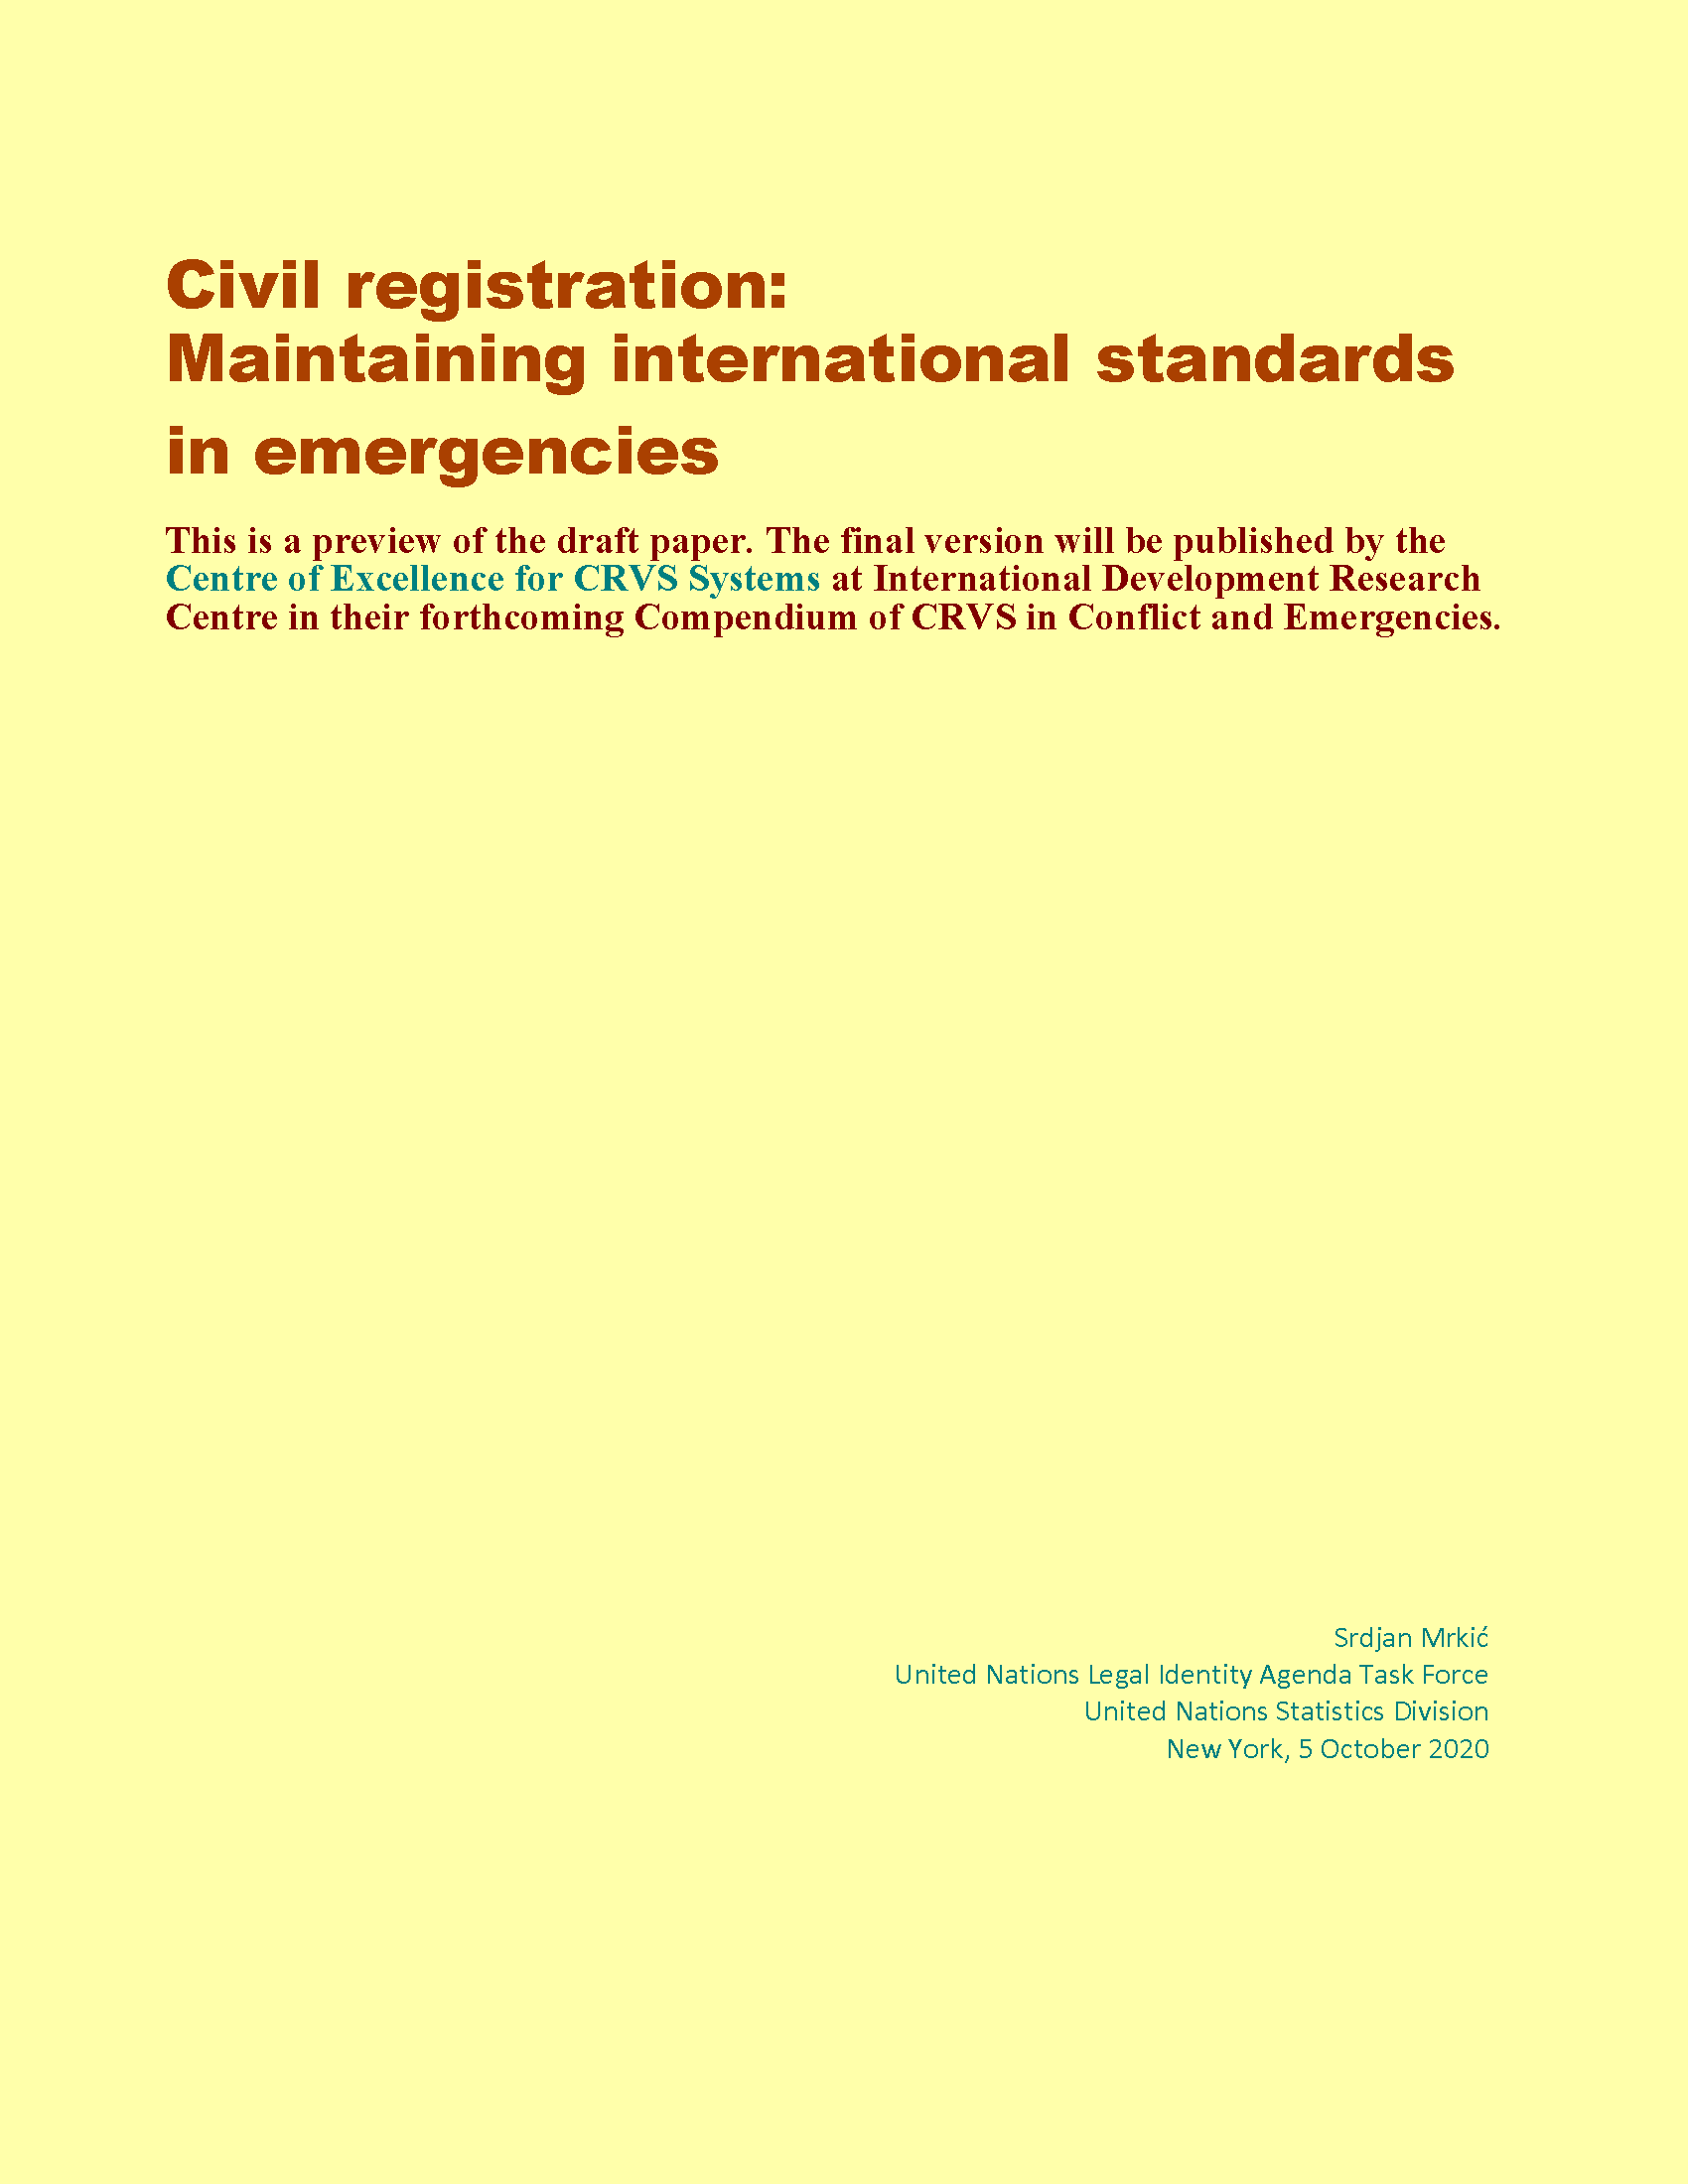 Civil registration: Maintaining international standards in emergencies